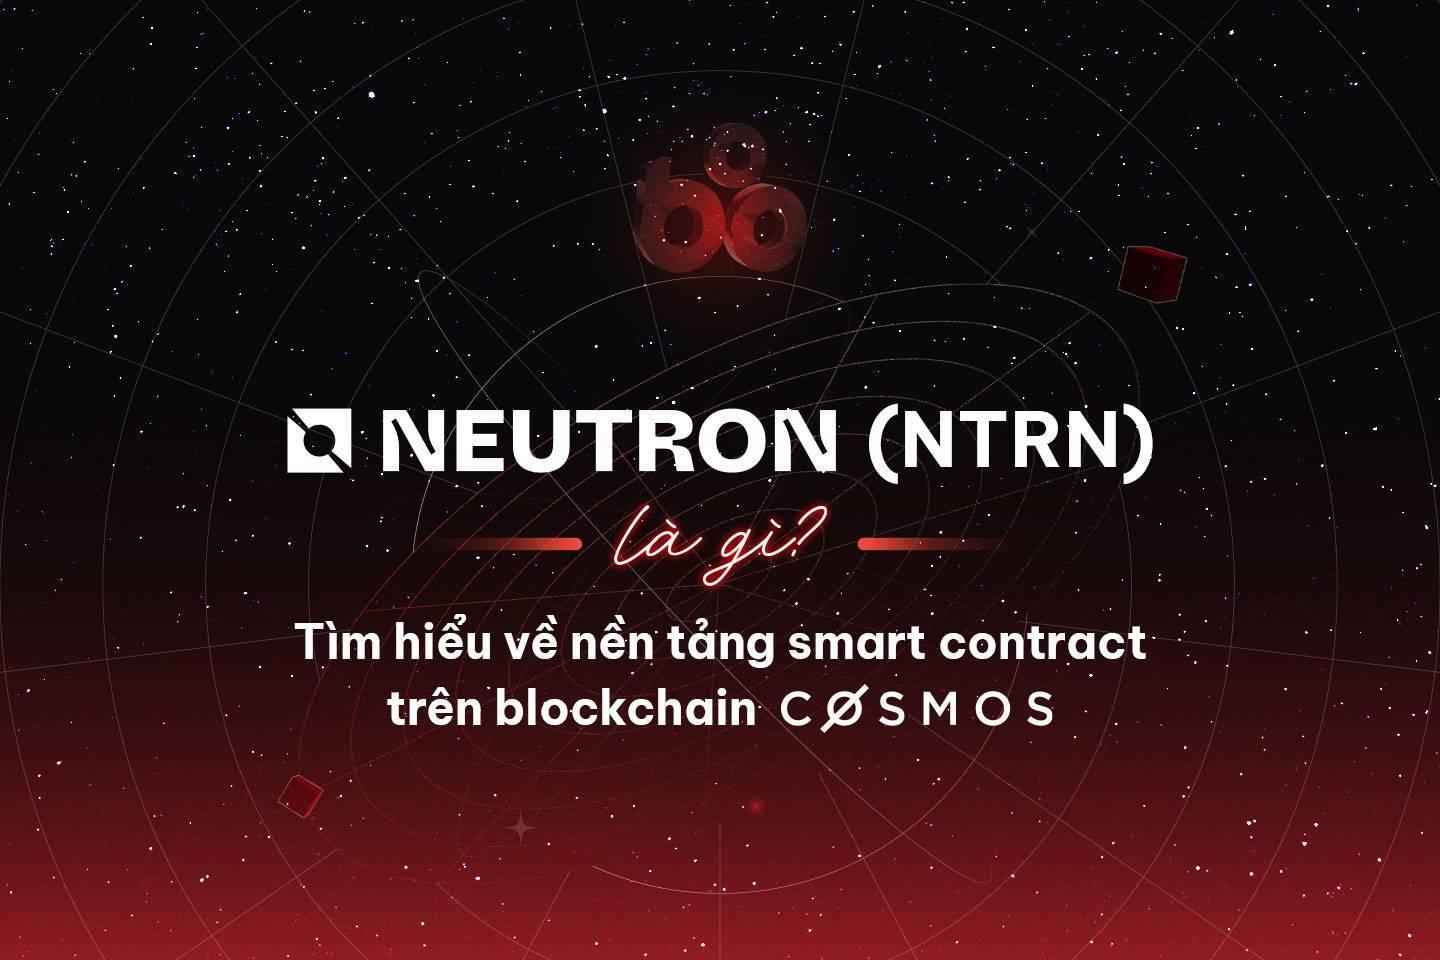 neutron-ntrn-la-gi-tim-hieu-ve-nen-tang-smart-contract-tren-blockchain-cosmos